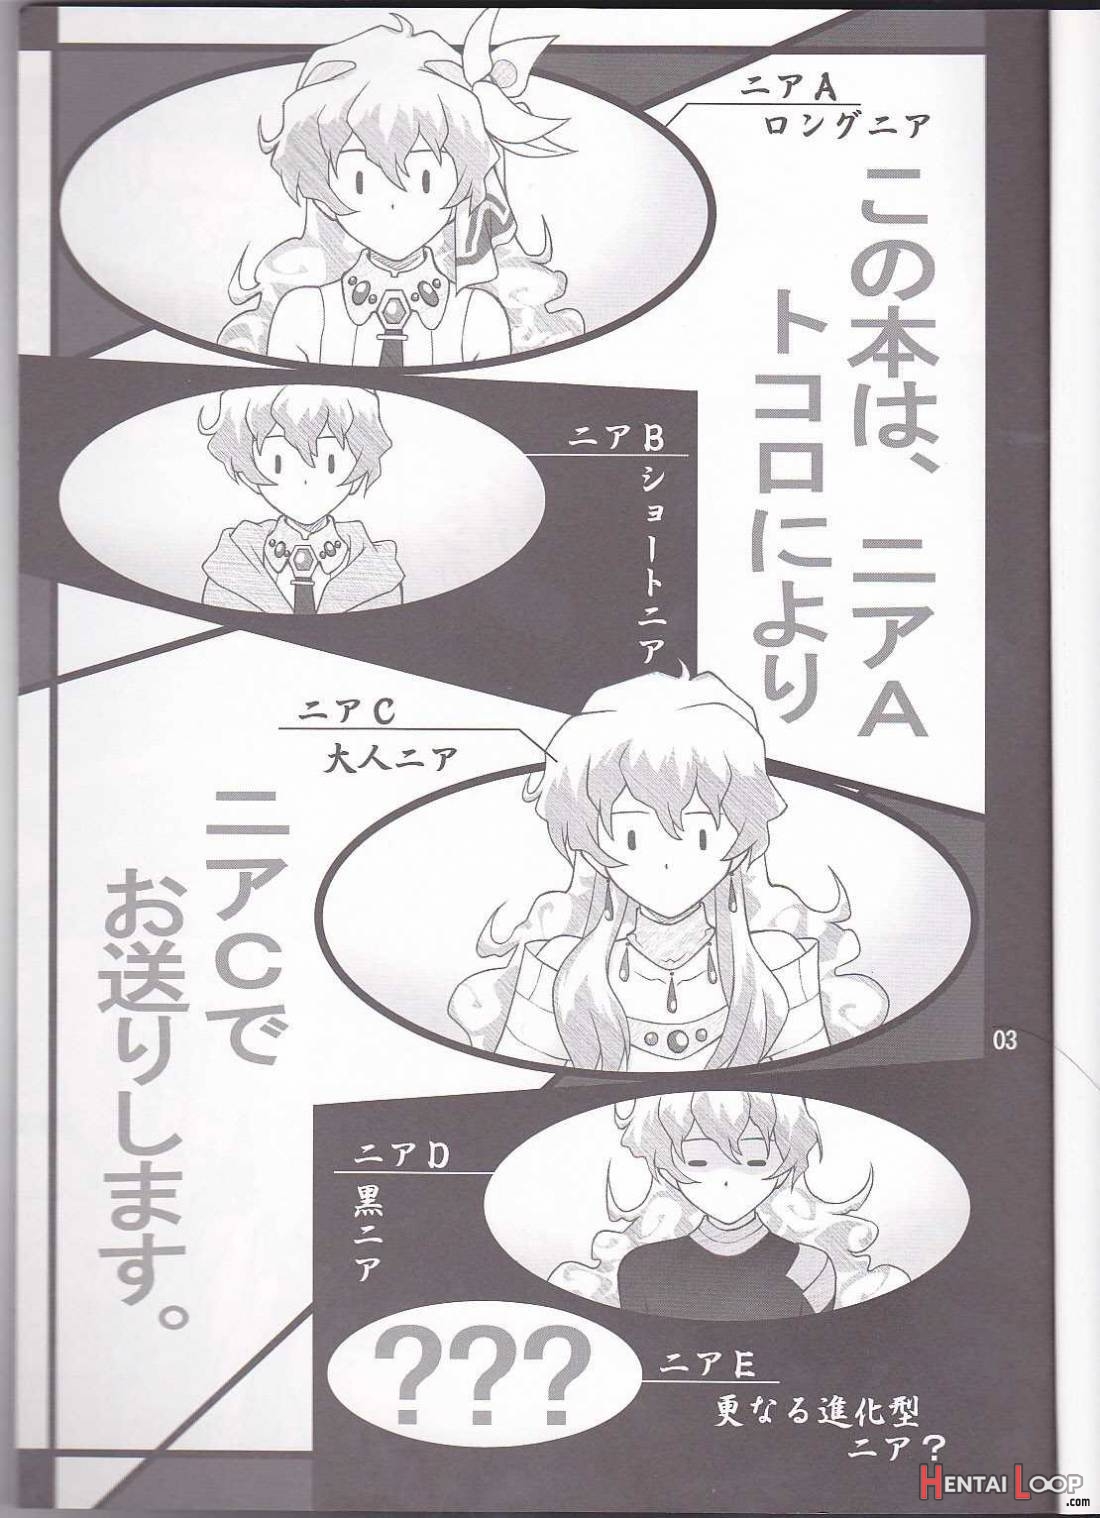 Oikari Nia-chan page 2